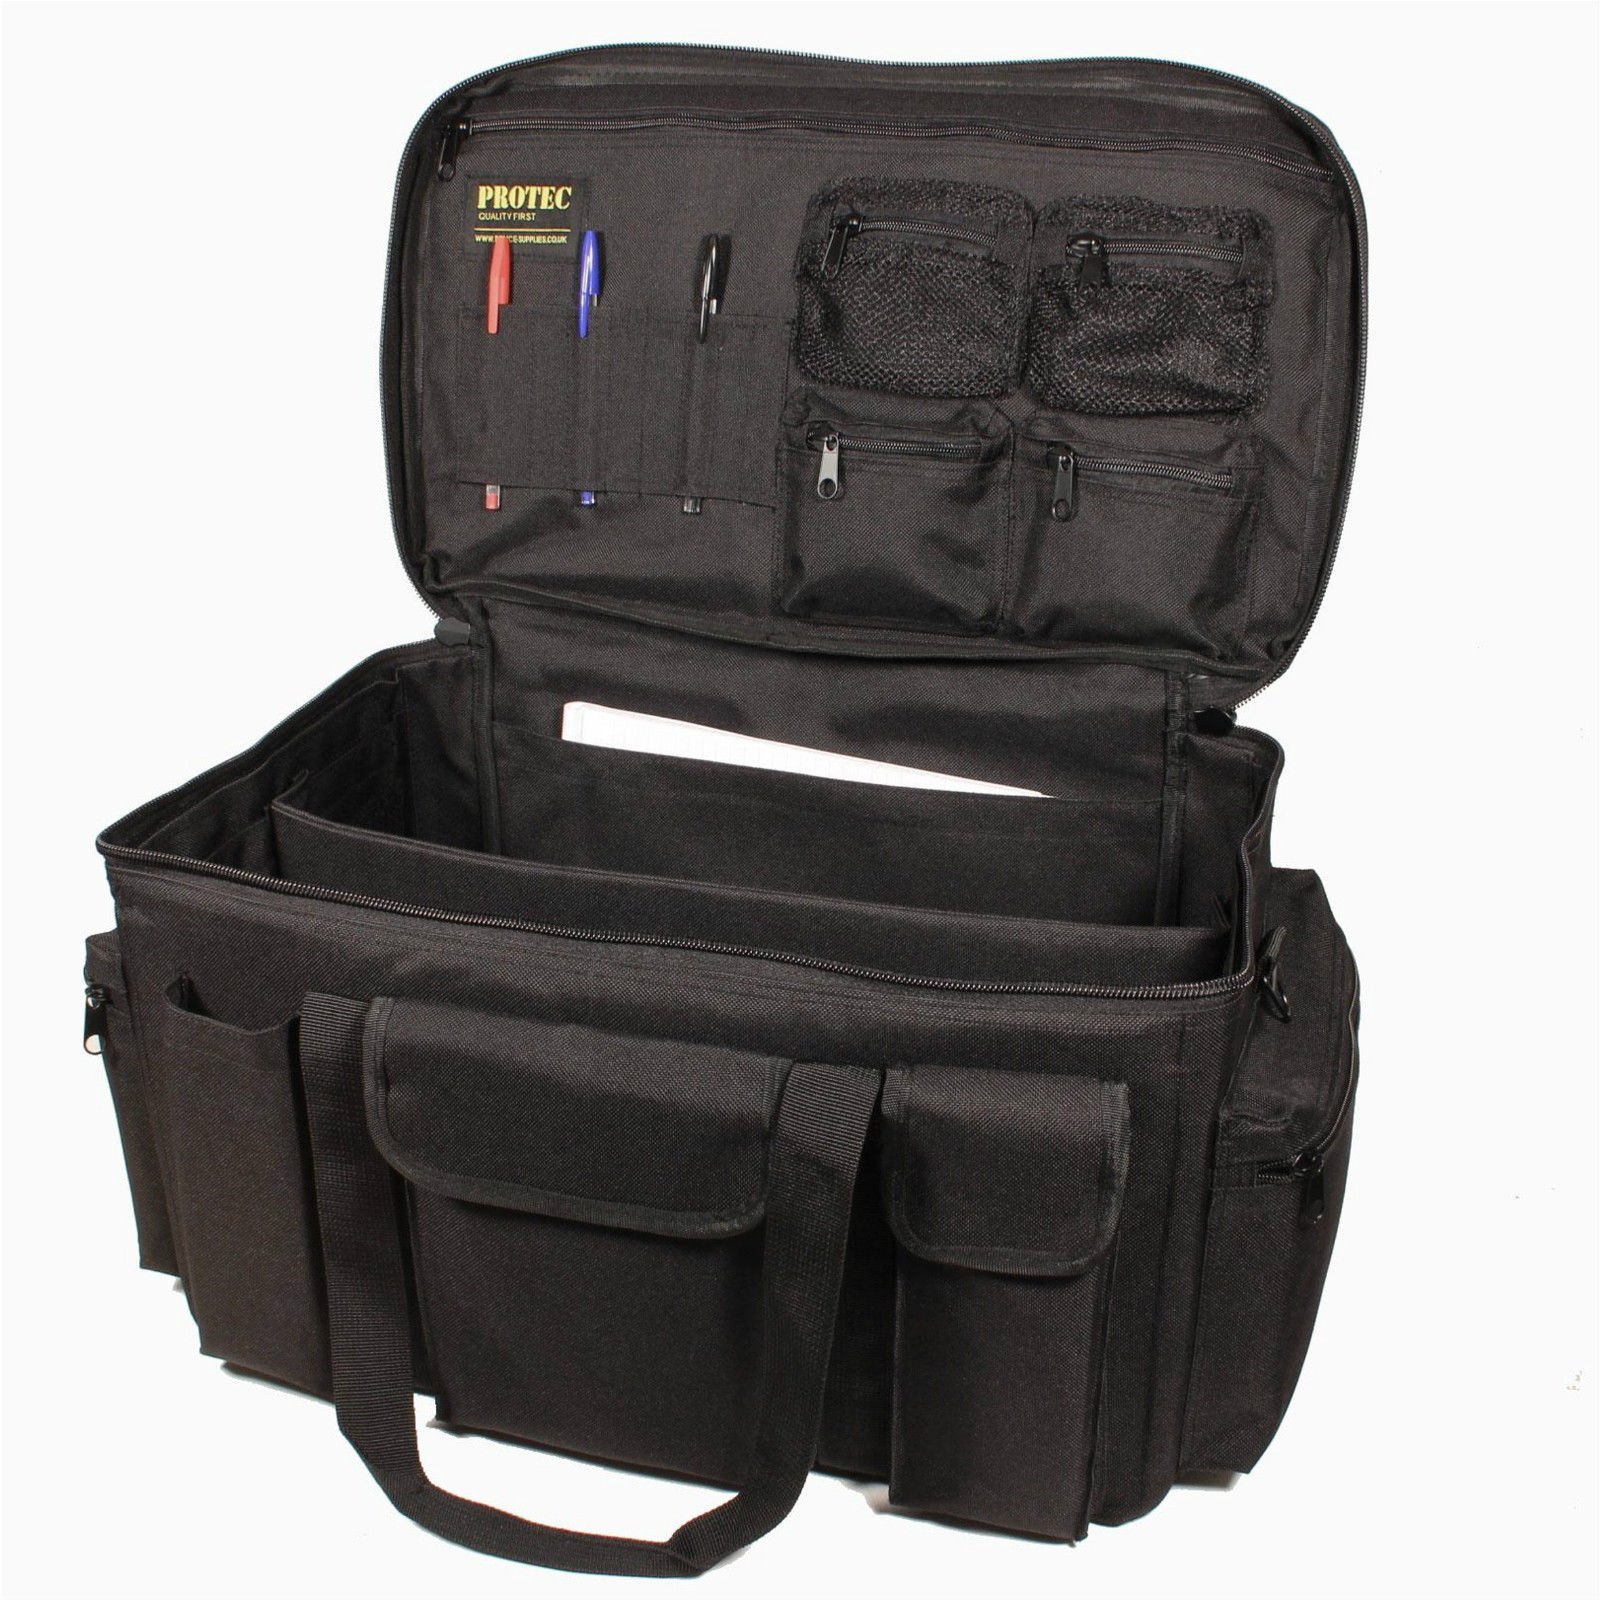 Large Magazine Gear Tactical Range Bag Outdoor Duffle Bag